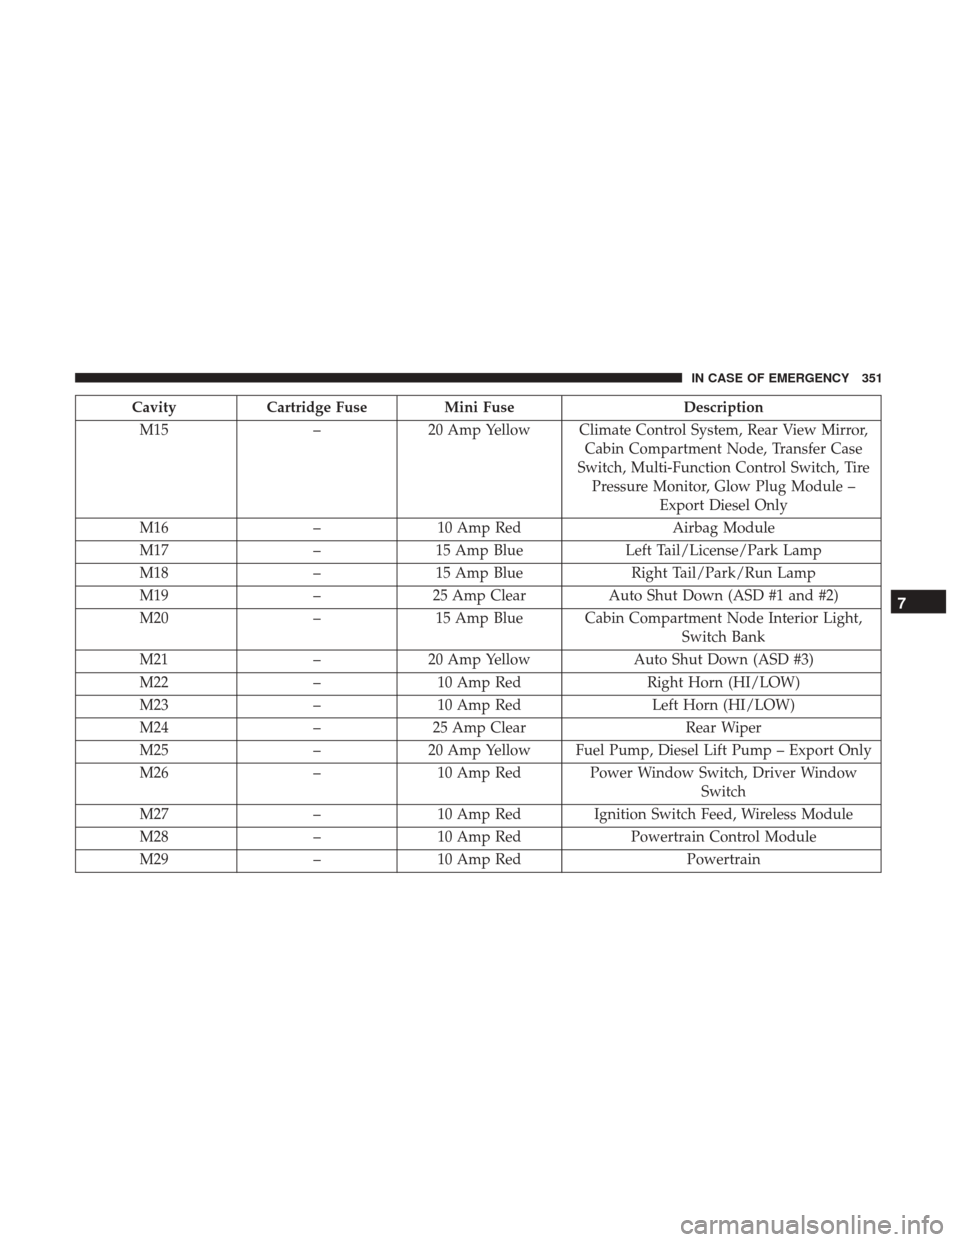 JEEP WRANGLER 2017 JK / 3.G Owners Manual CavityCartridge Fuse Mini Fuse Description
M15 –20 Amp Yellow Climate Control System, Rear View Mirror,
Cabin Compartment Node, Transfer Case
Switch, Multi-Function Control Switch, Tire Pressure Mon